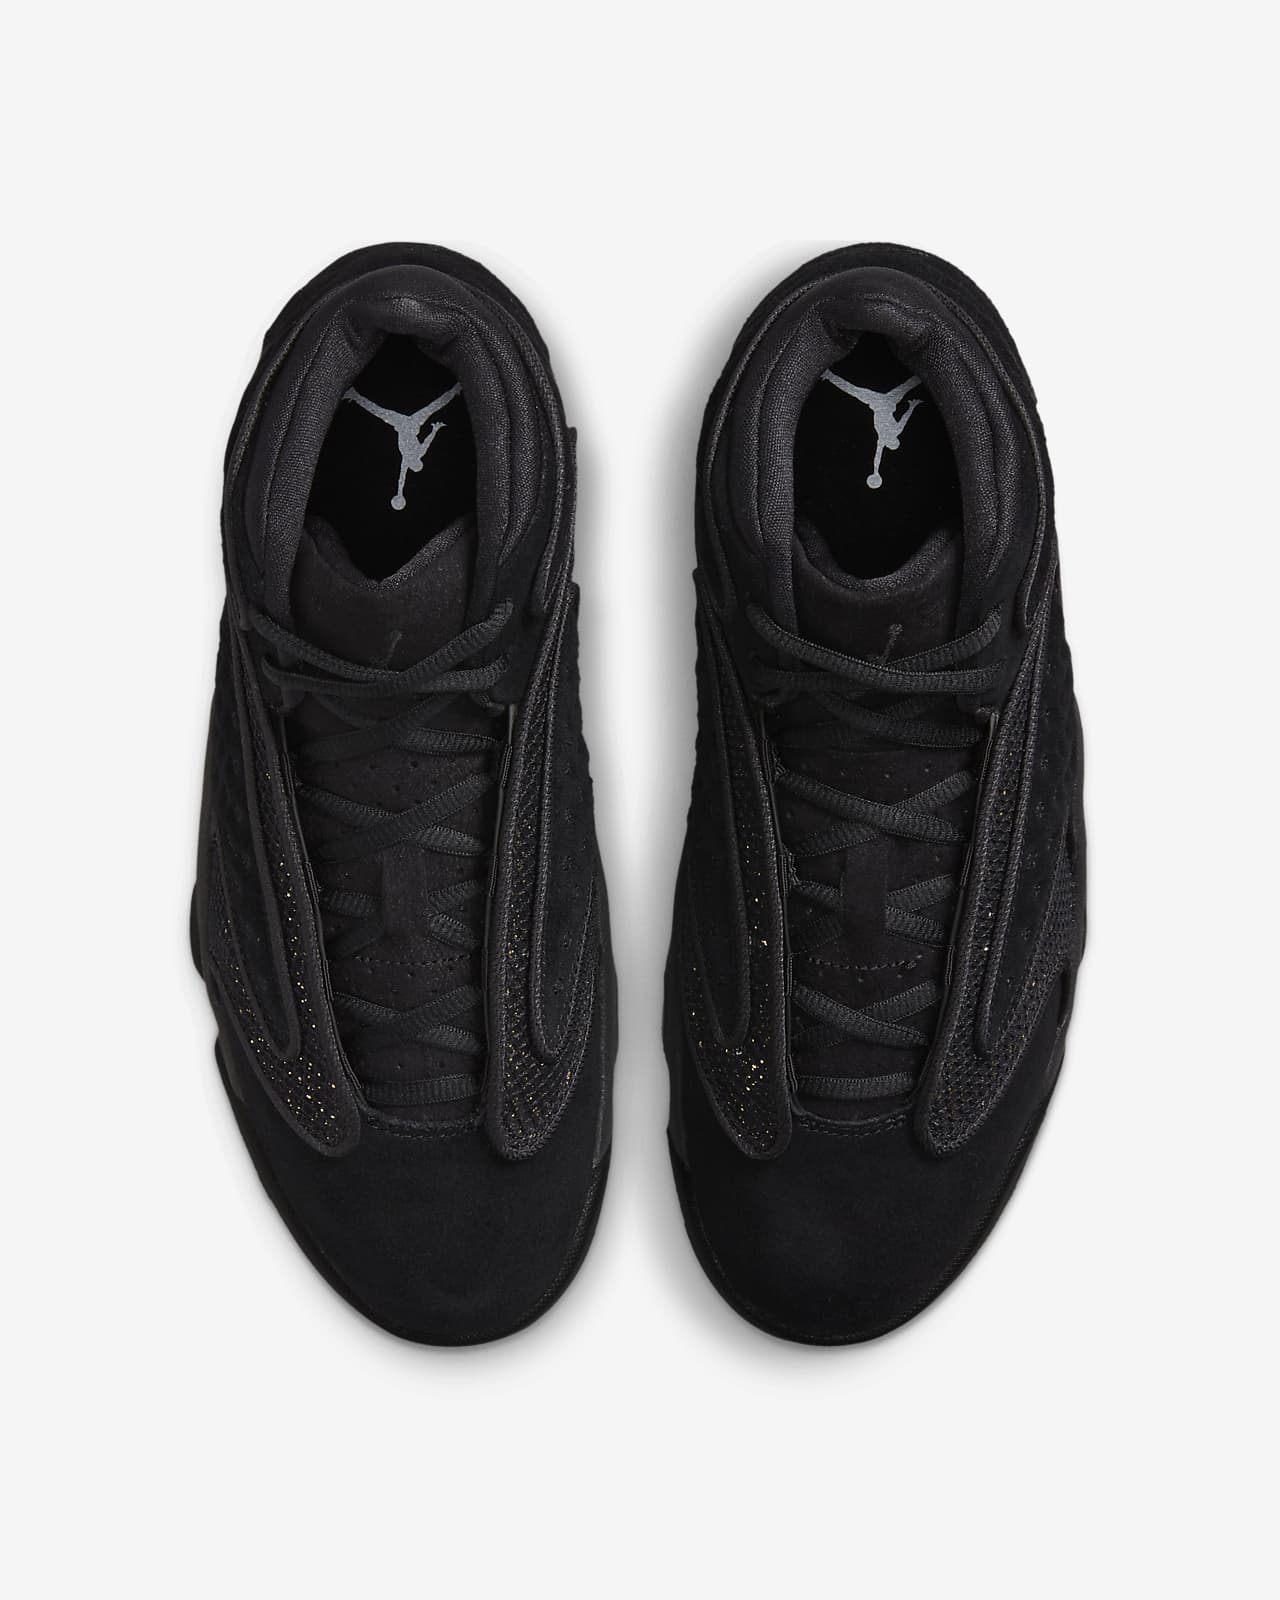 black jordan shoes for women